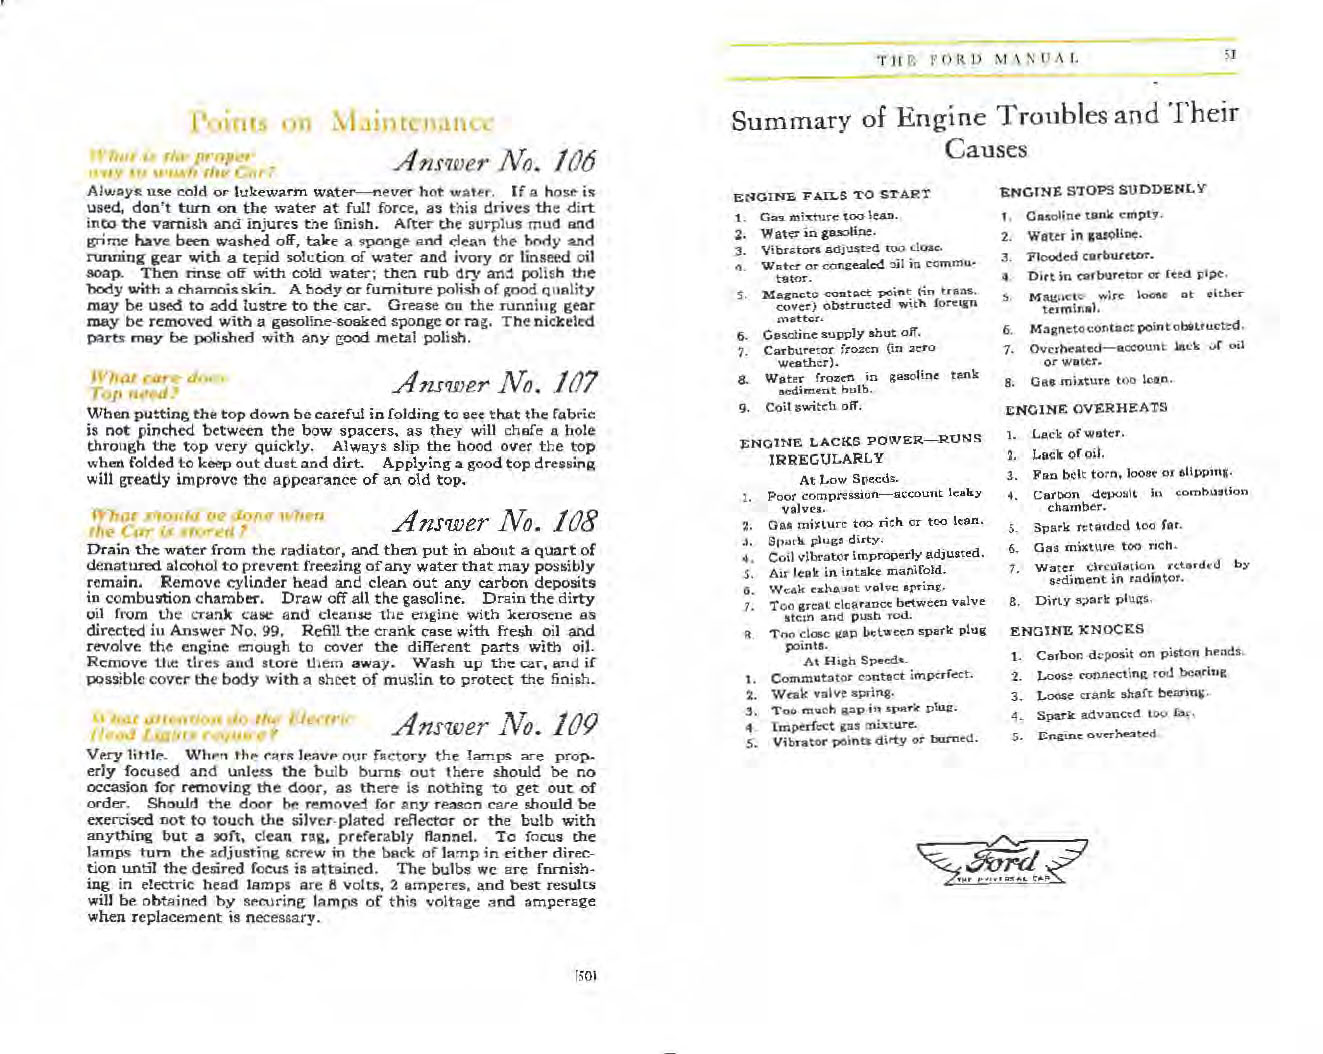 n_1917 Ford Owners Manual-50-51.jpg